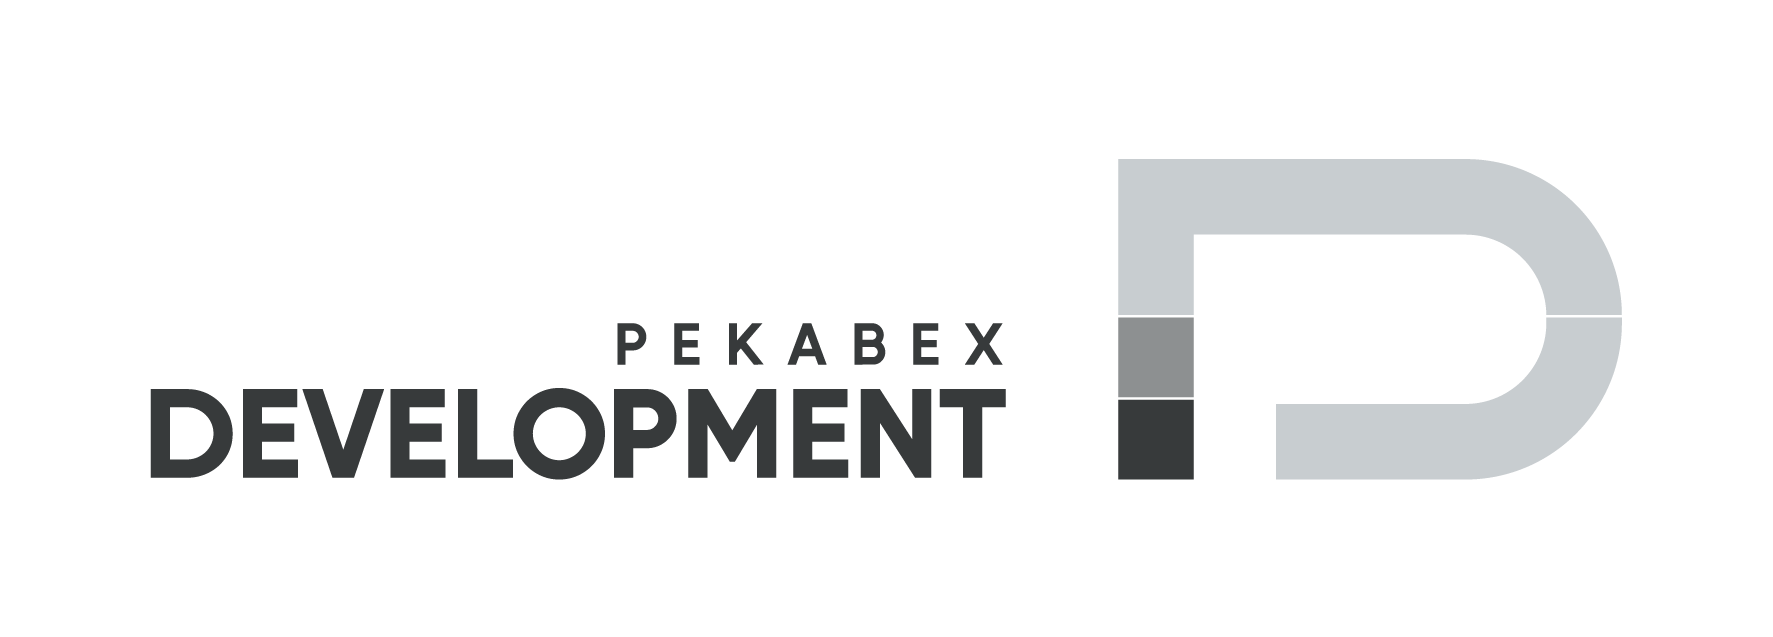 Pekabex Development